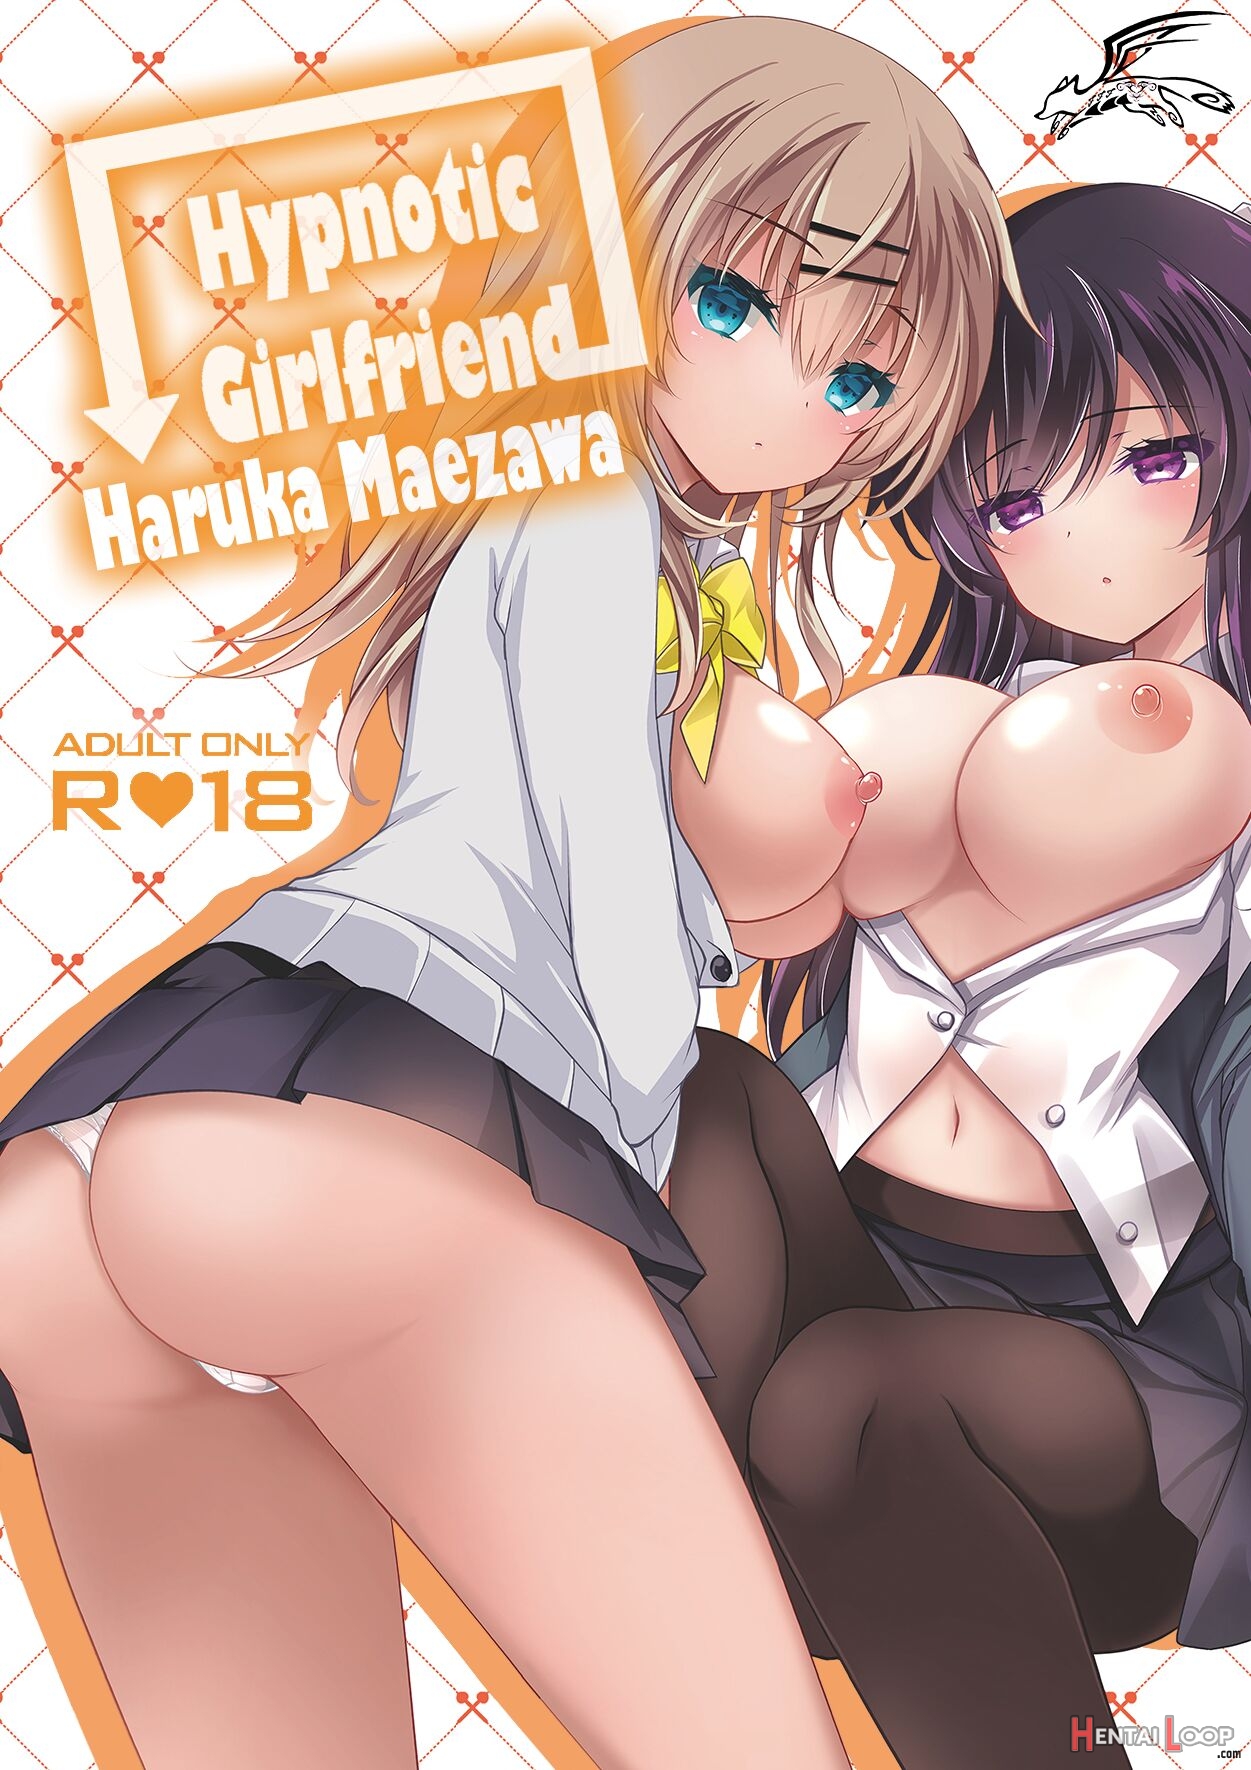 Hypnotic Girlfriend Haruka Maezawa page 1